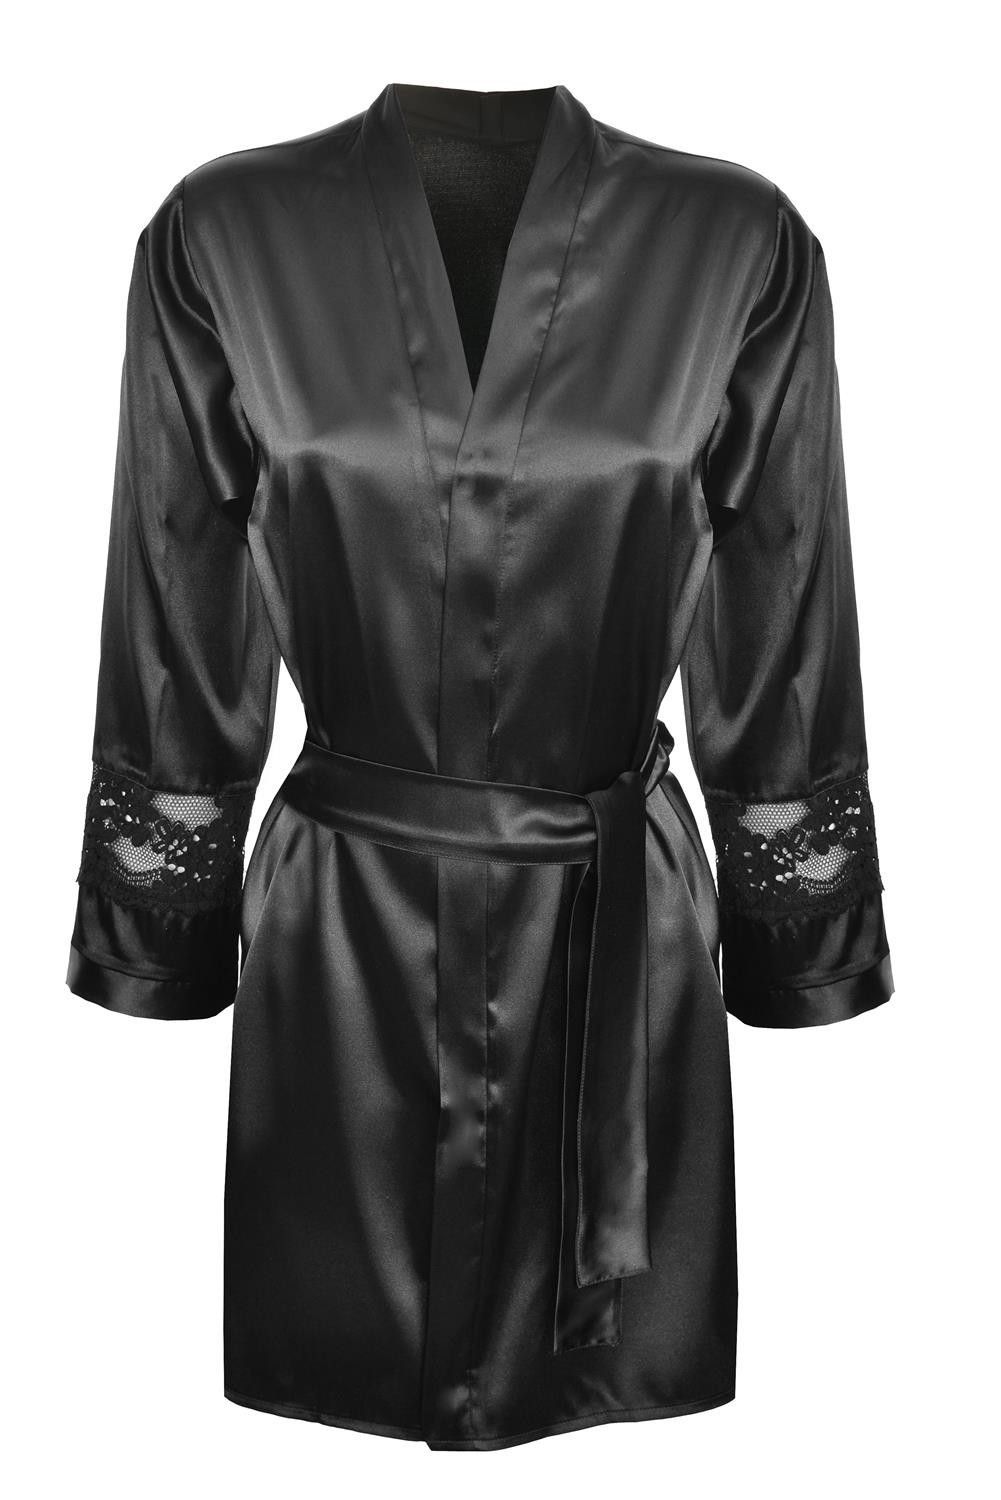 DKaren Housecoat Betty Black XS černá